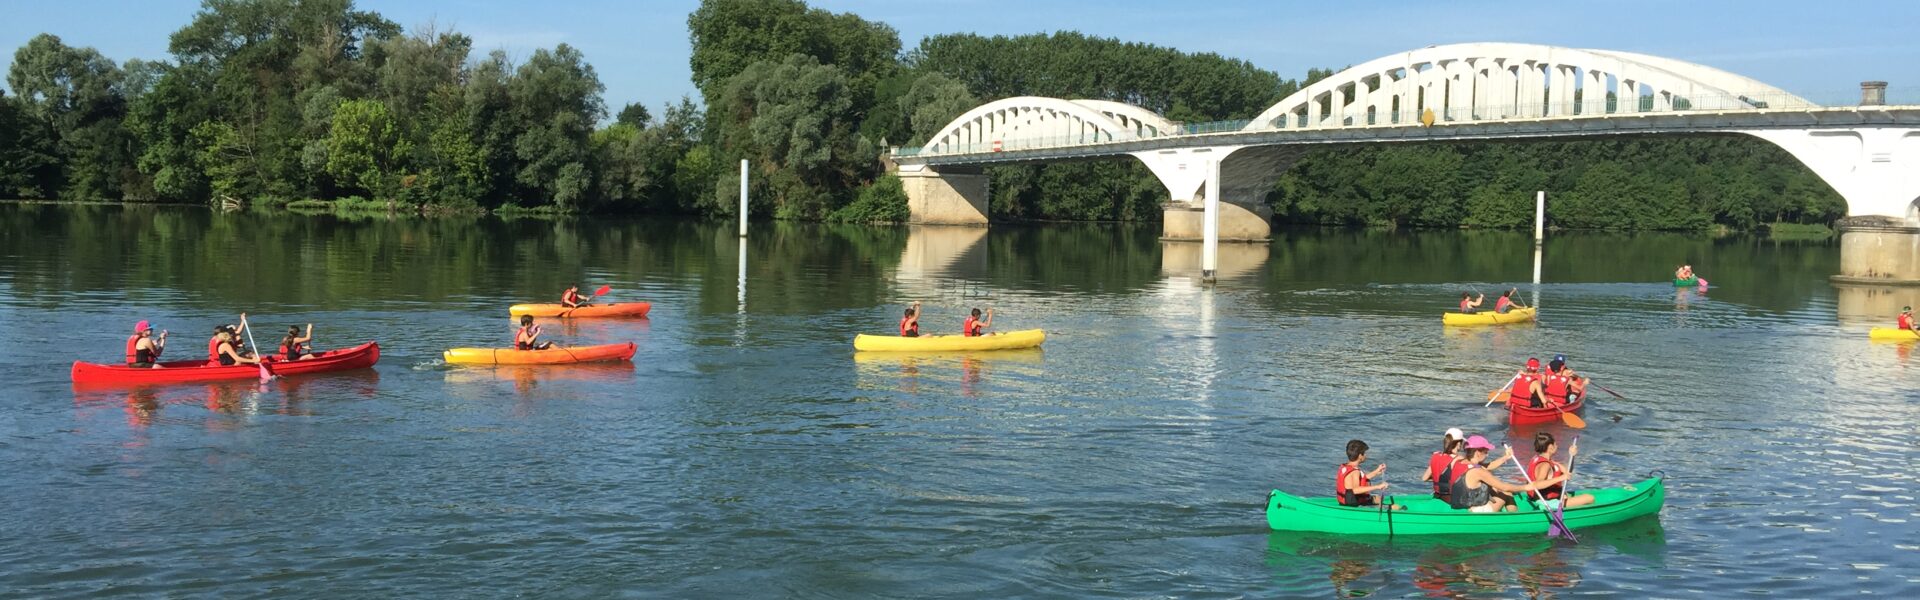 Canoe kayak hire - Thoissey - Ain